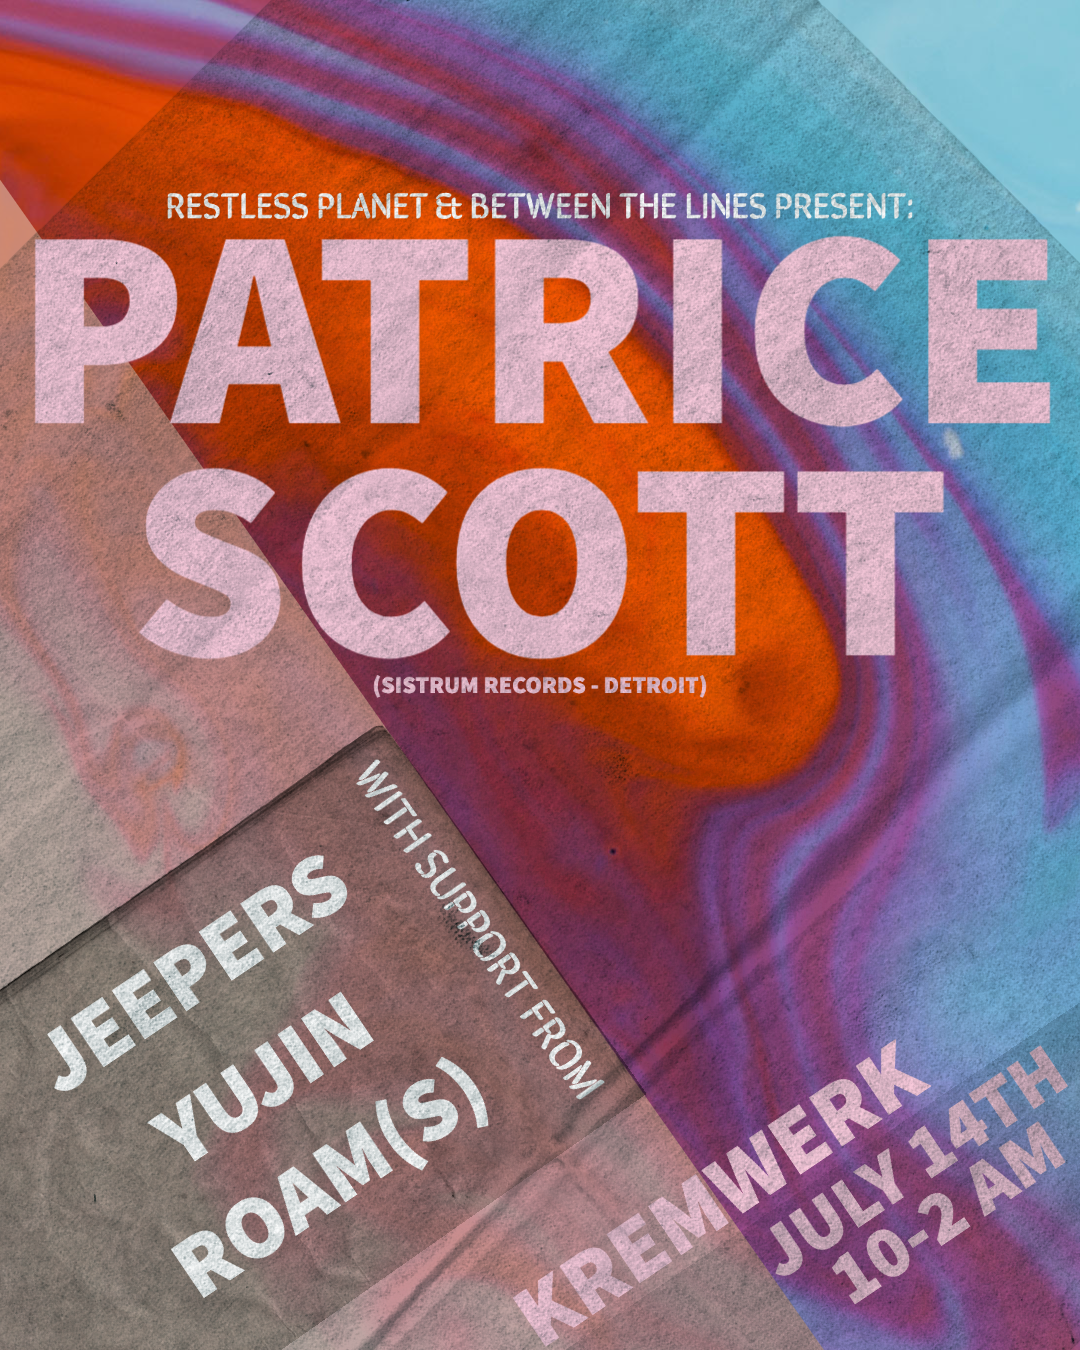 Restless Planet and BTL present: Patrice Scott - Página frontal